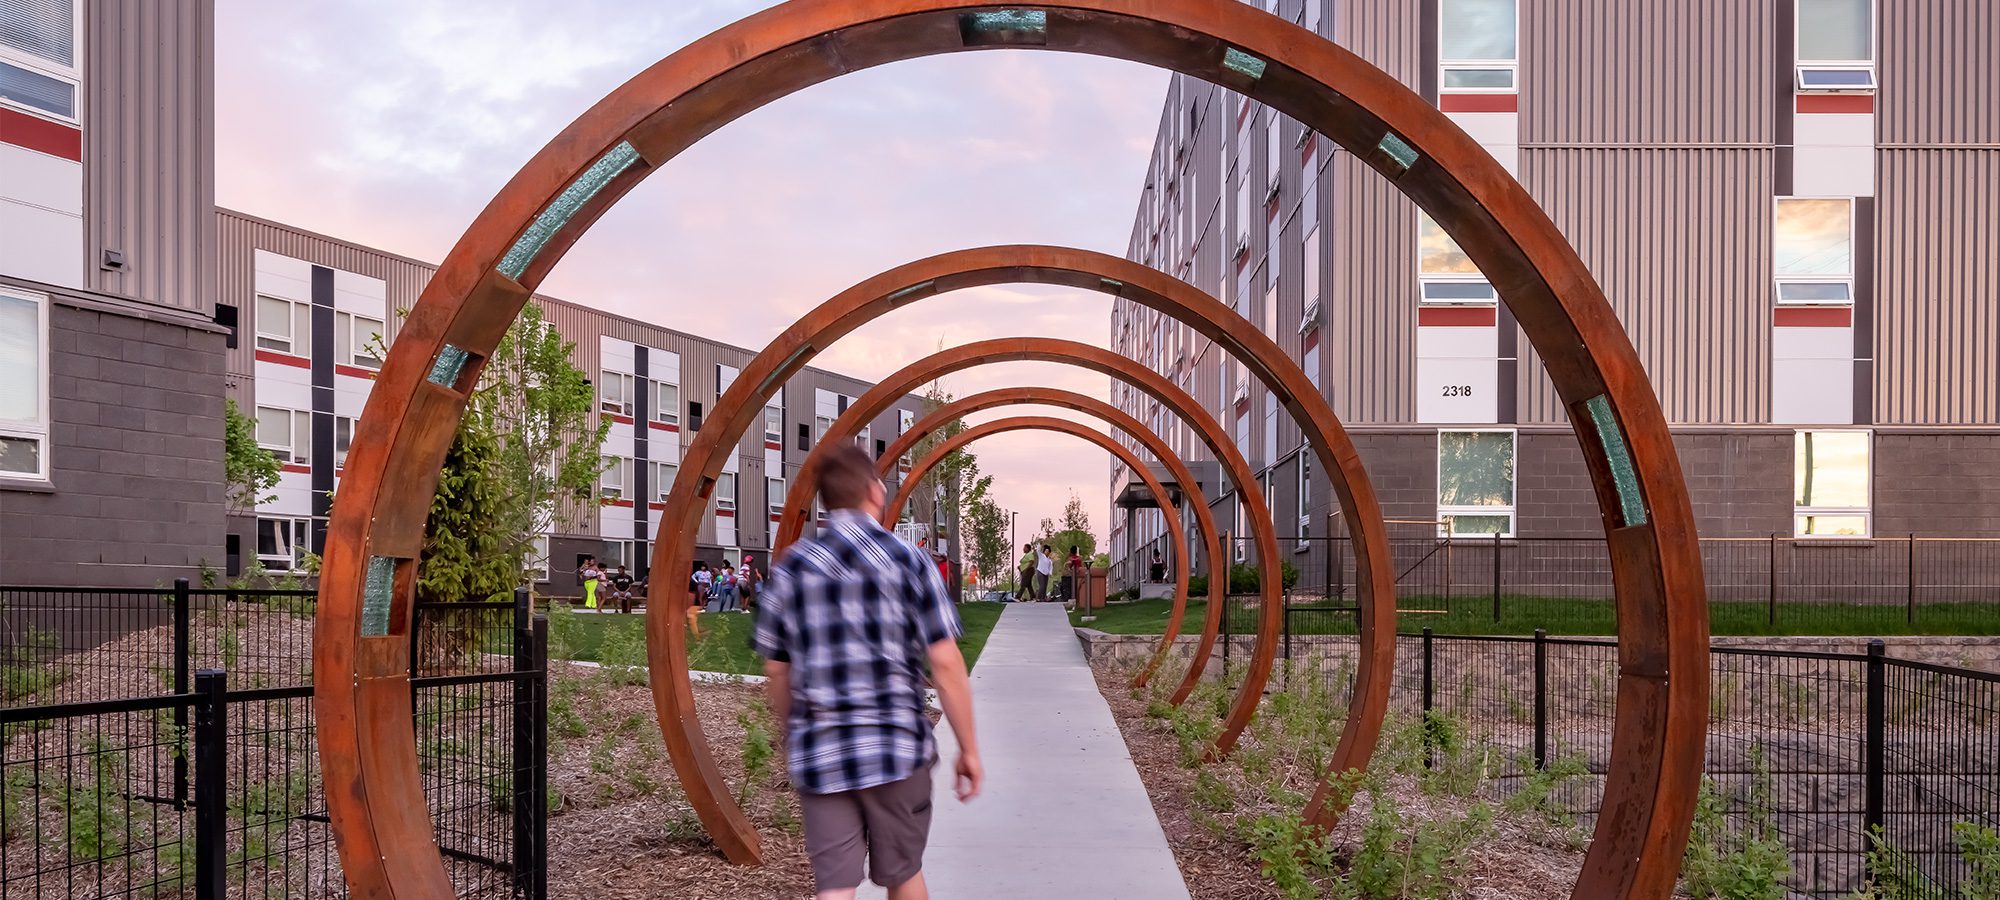 man walking through circular arches near apartment building community courtyard